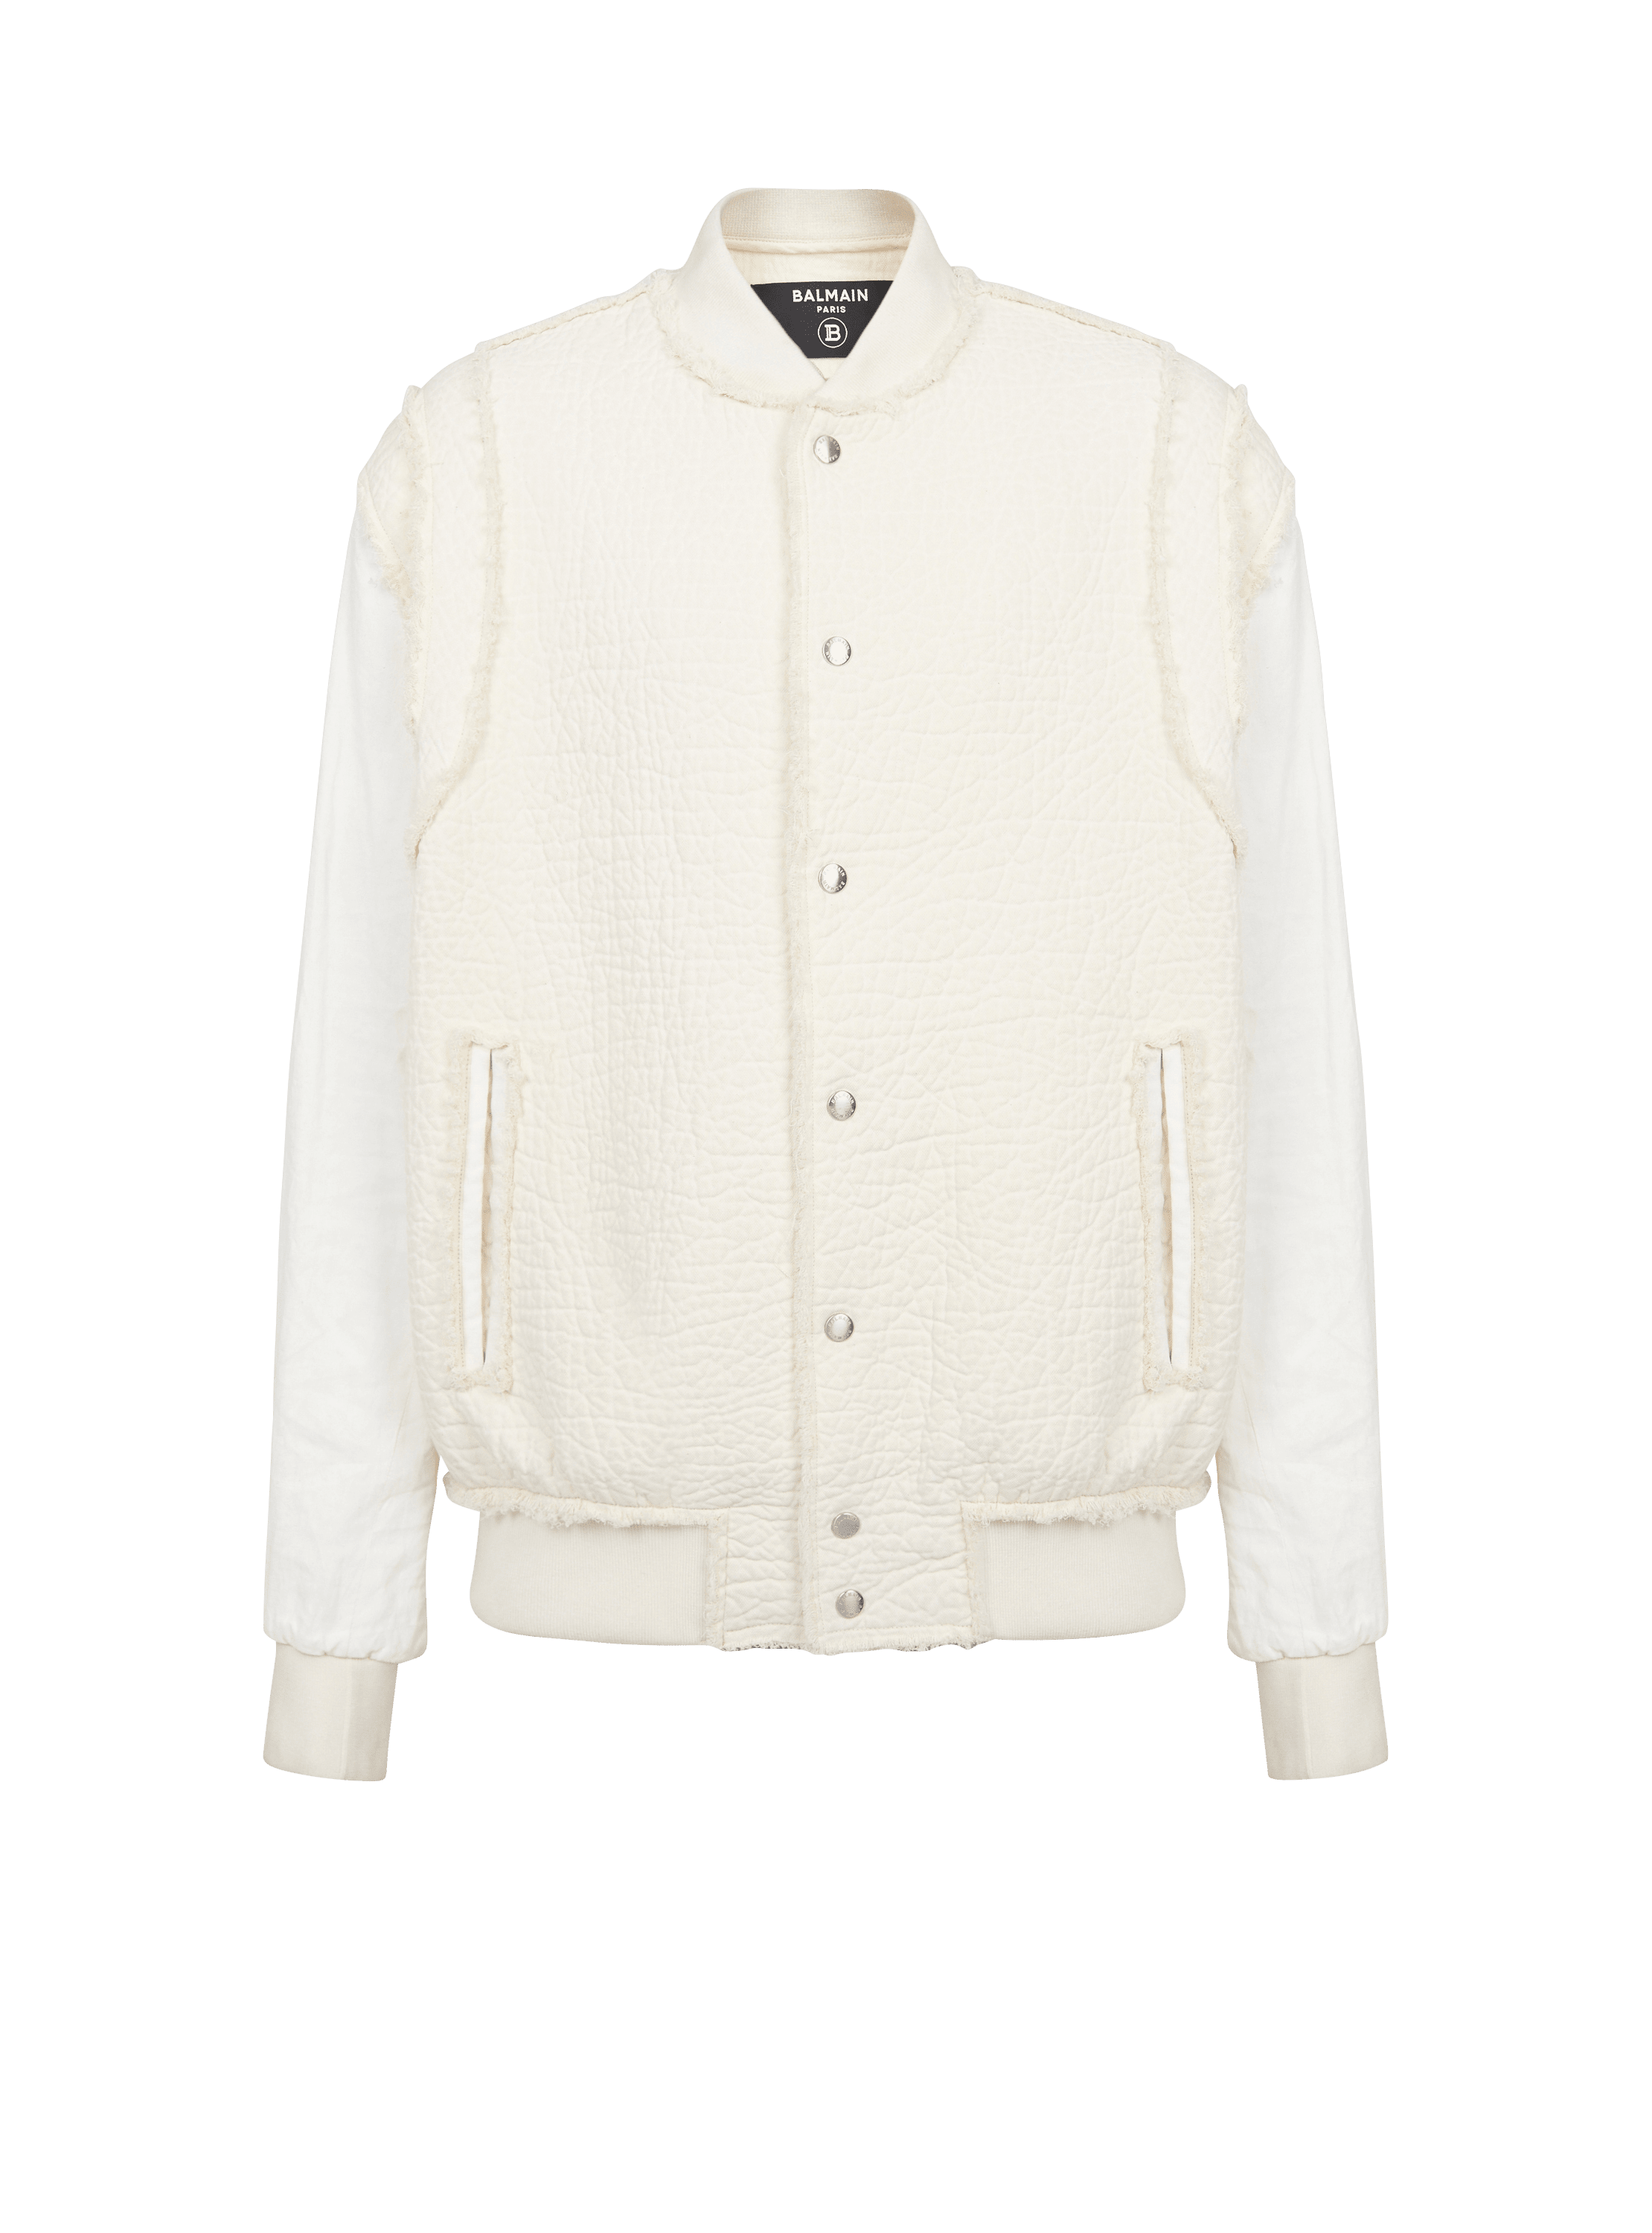 Textured cotton bomber jacket - Men | BALMAIN